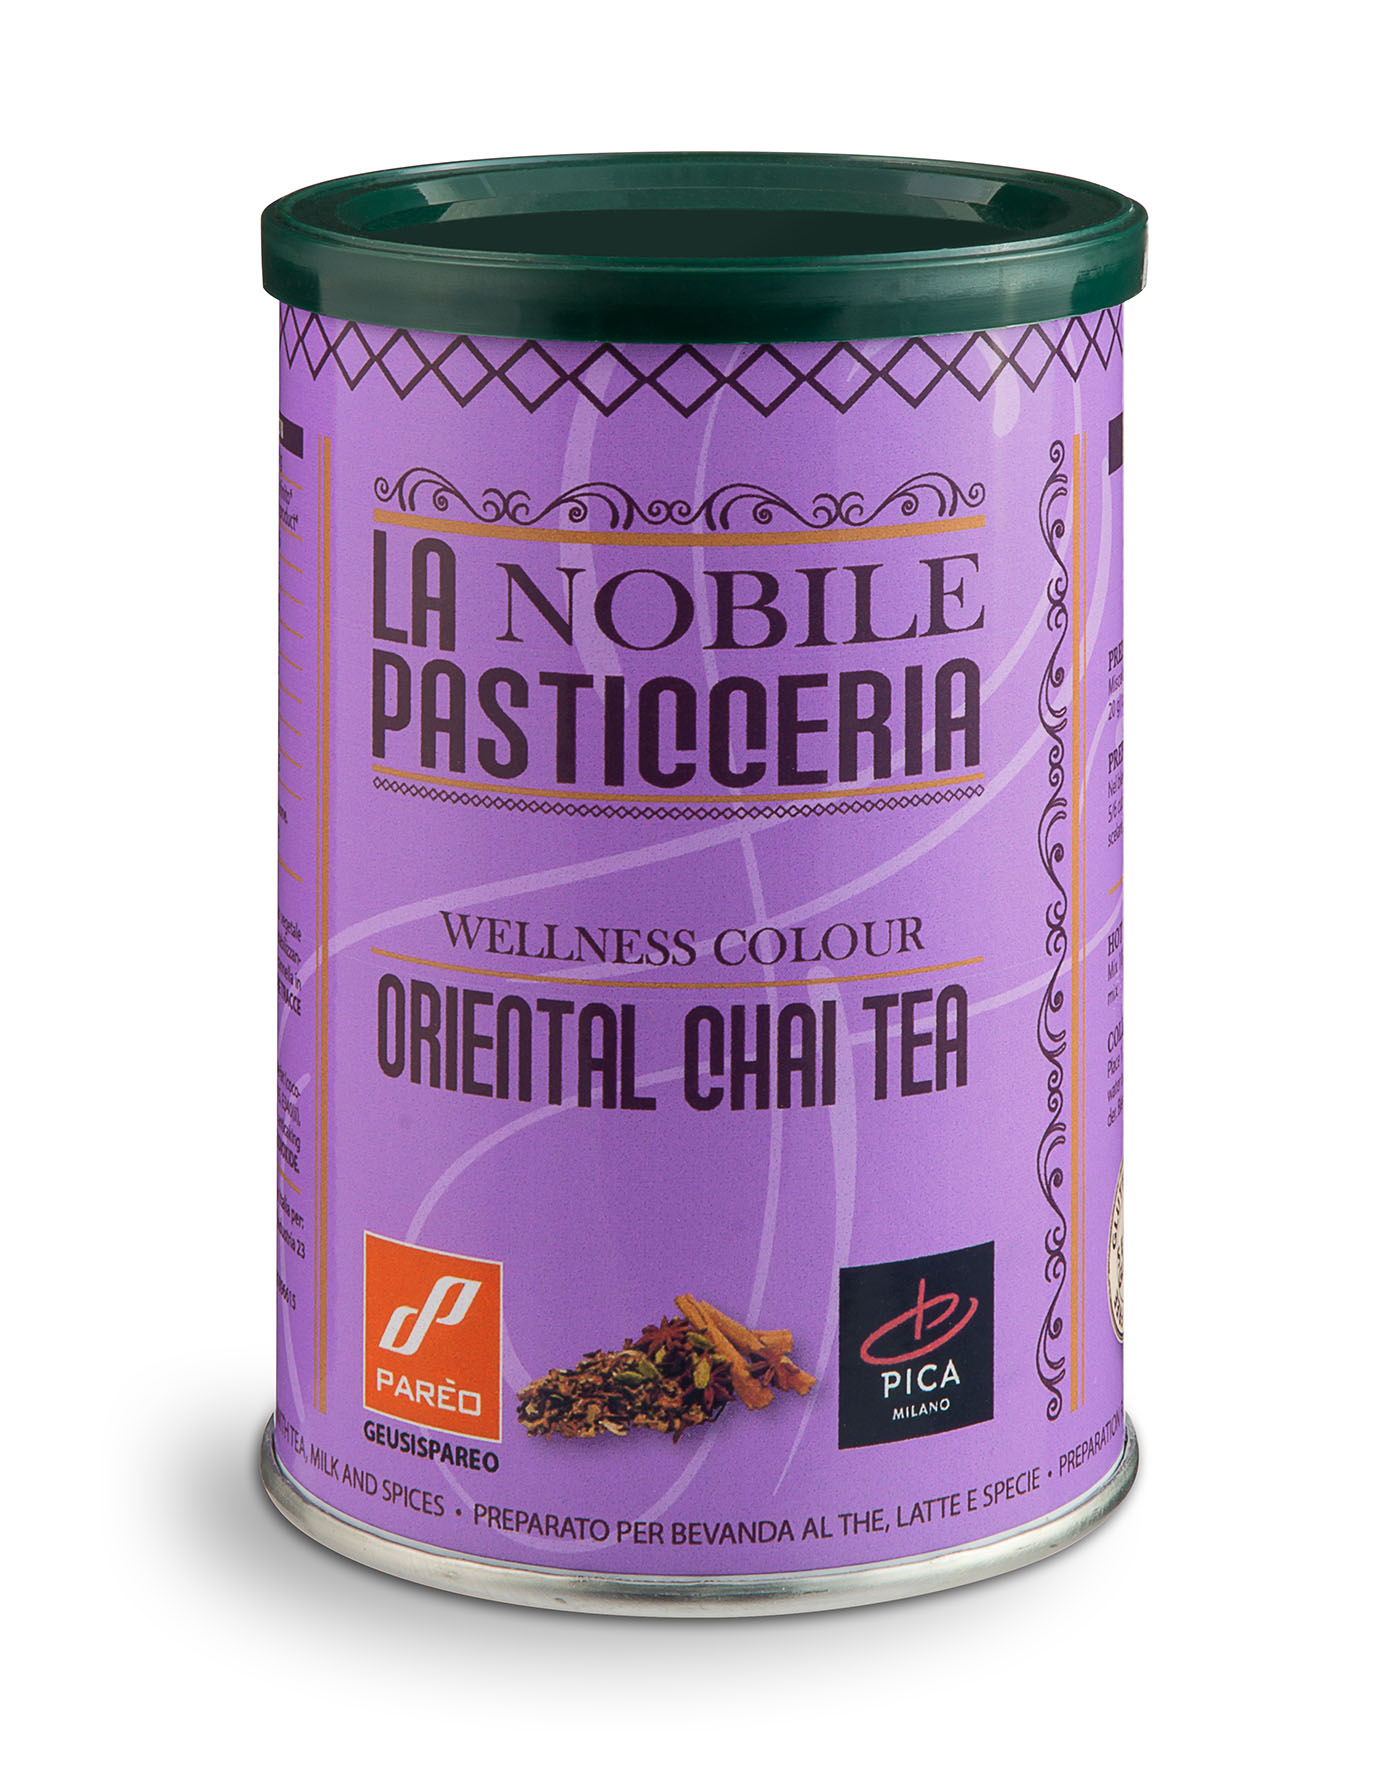 La Nobile Pasticceria - ORIENTAL CHAI TEA